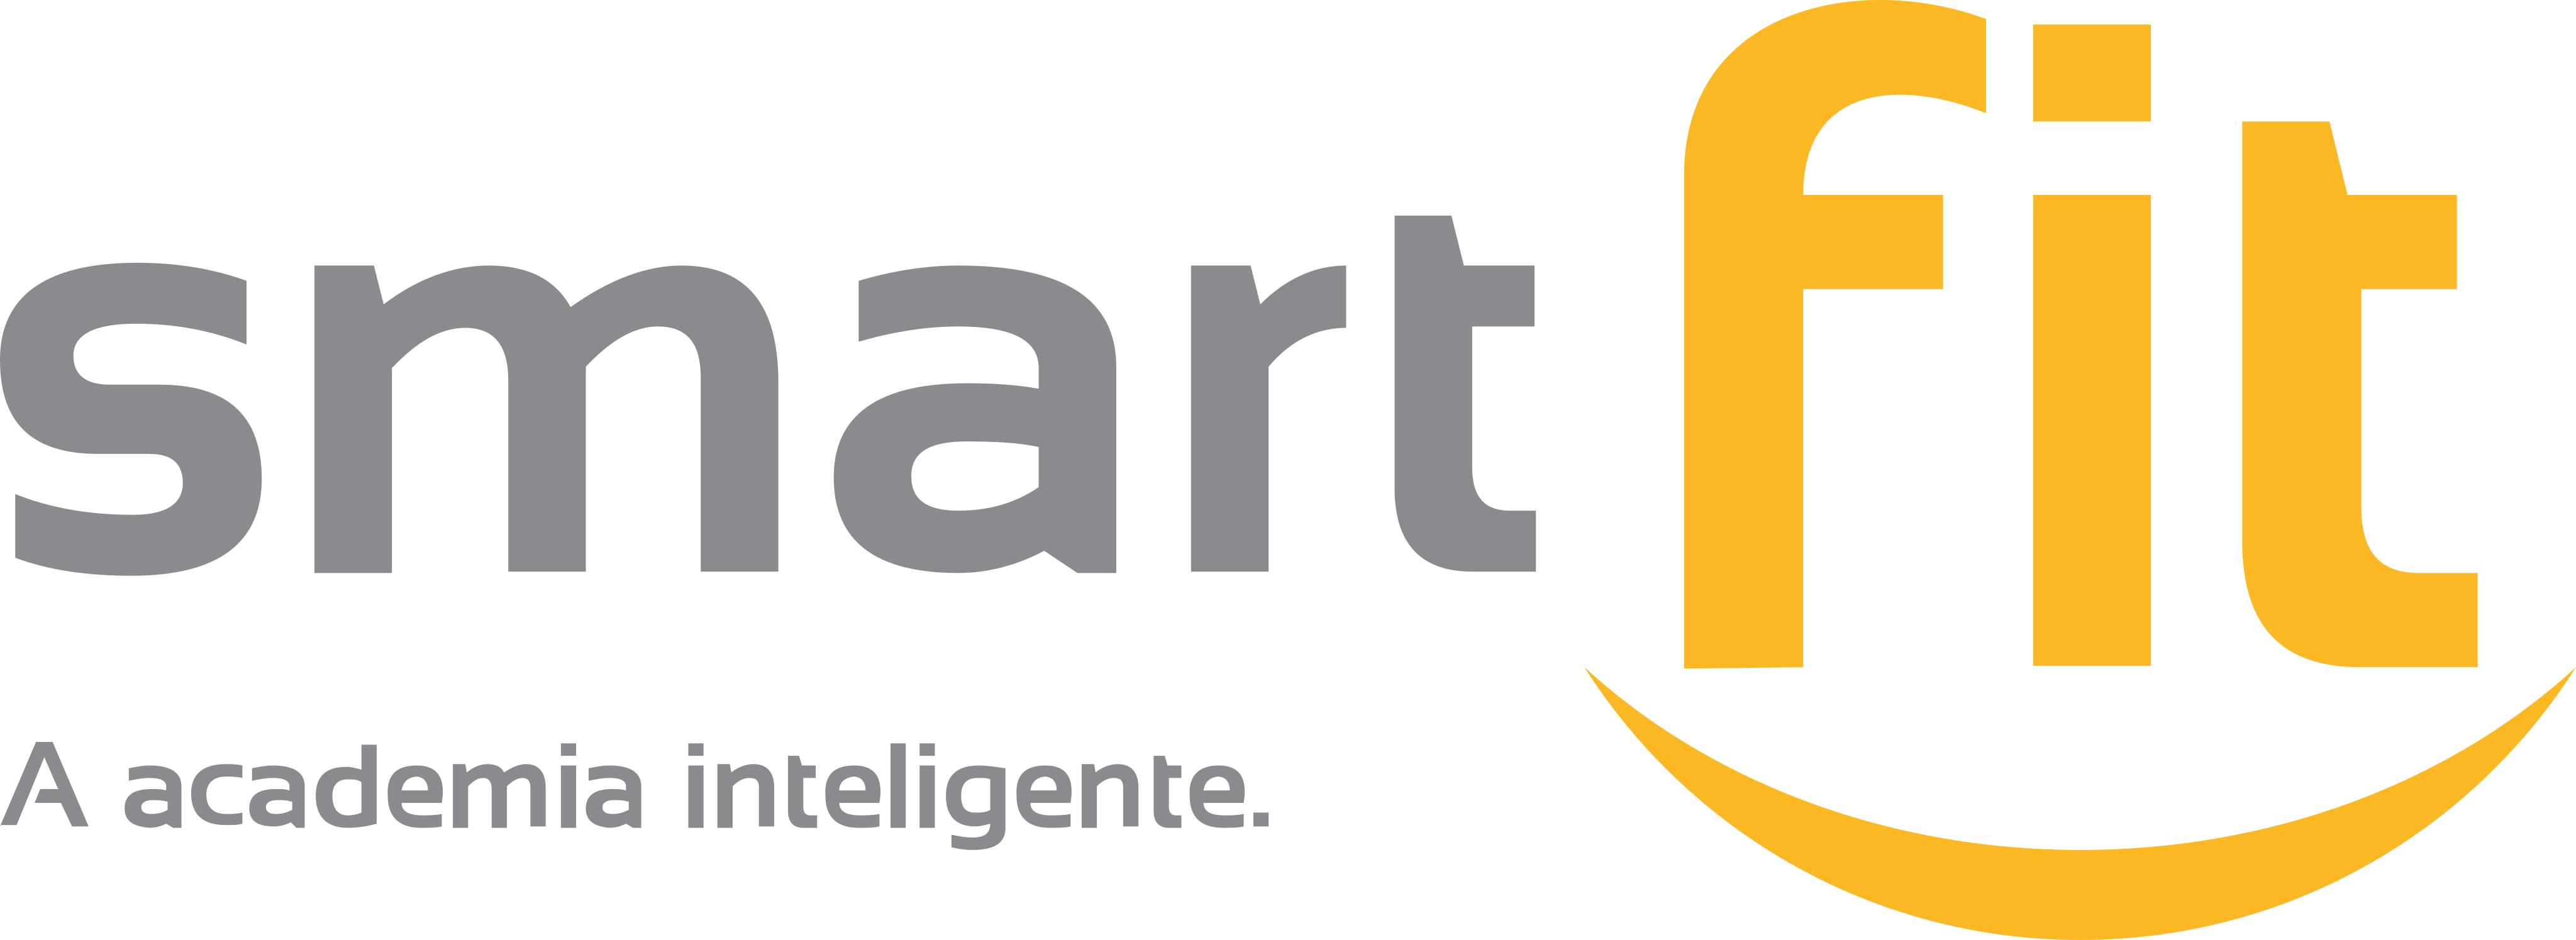 smart fit logo 2 - Smart Fit Logo